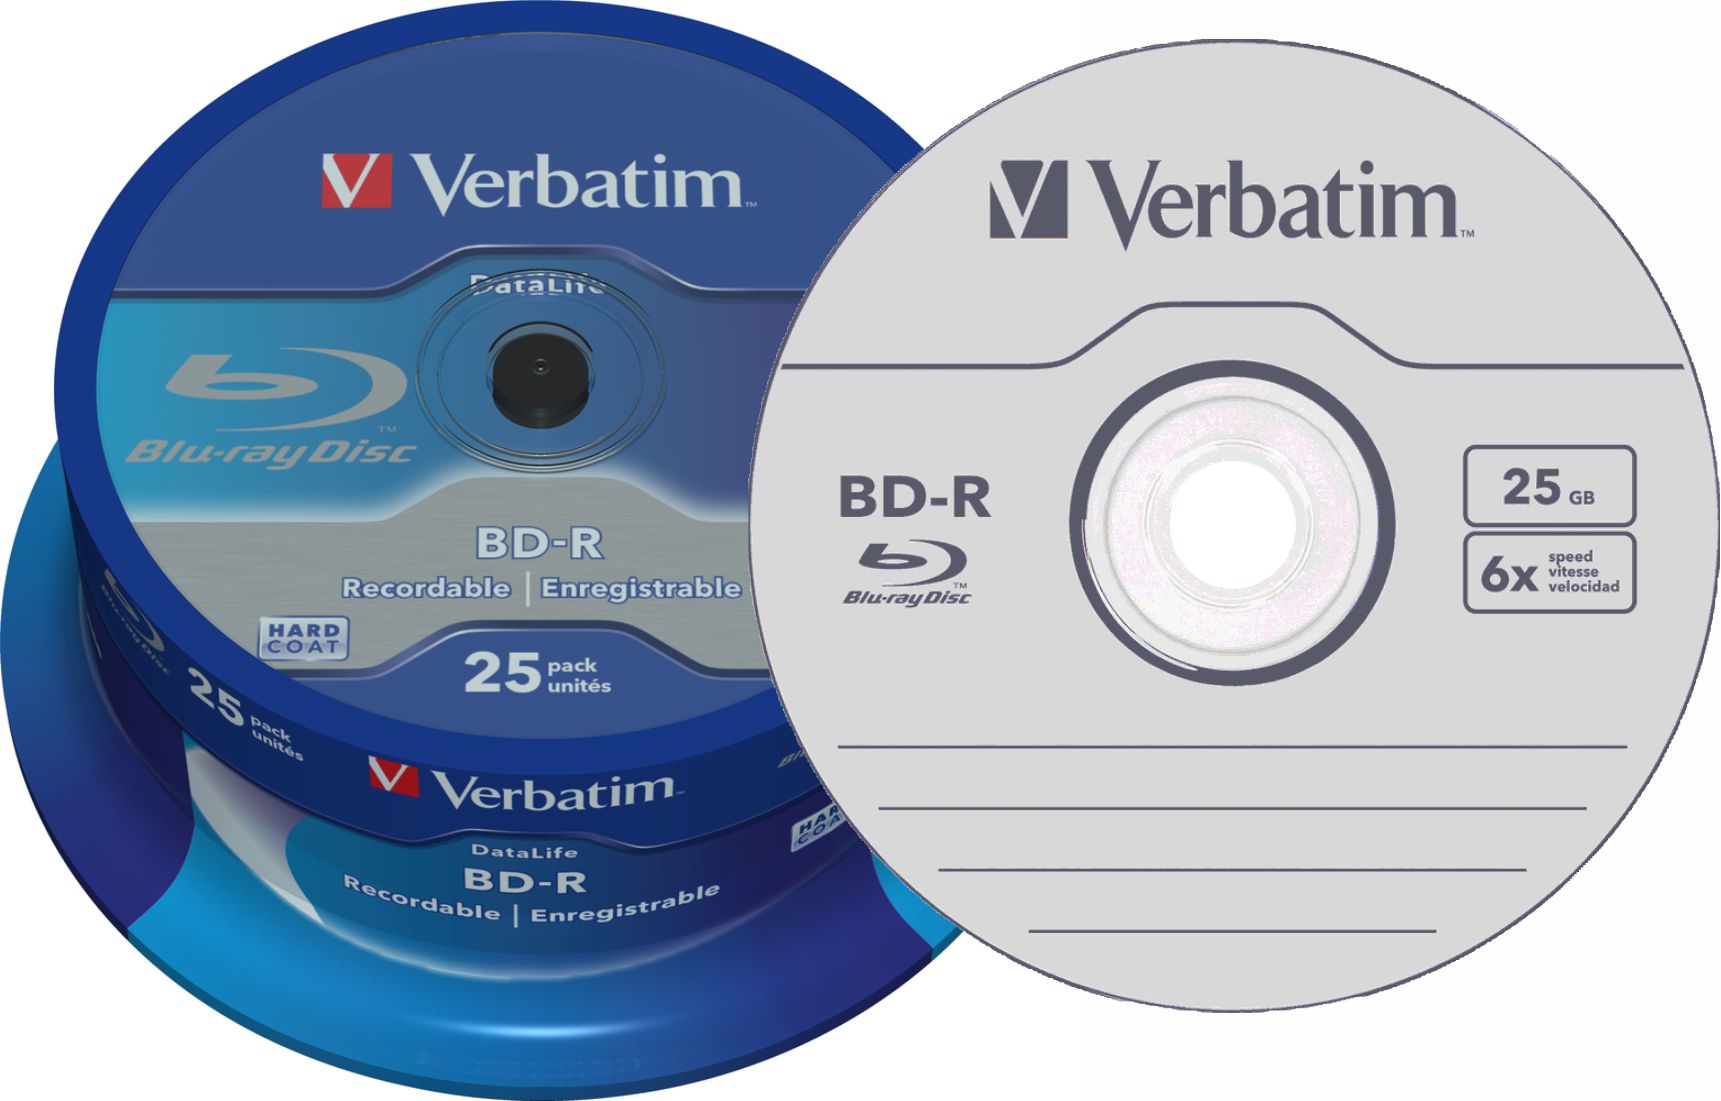 Cd 25 6. Диск Blu ray cd25 GB. Verbatim Blu-ray диск bd-re DL 50 ГБ 2x BDRE. Blu ray 25 GB. Blu-ray (Blu-ray Disc).